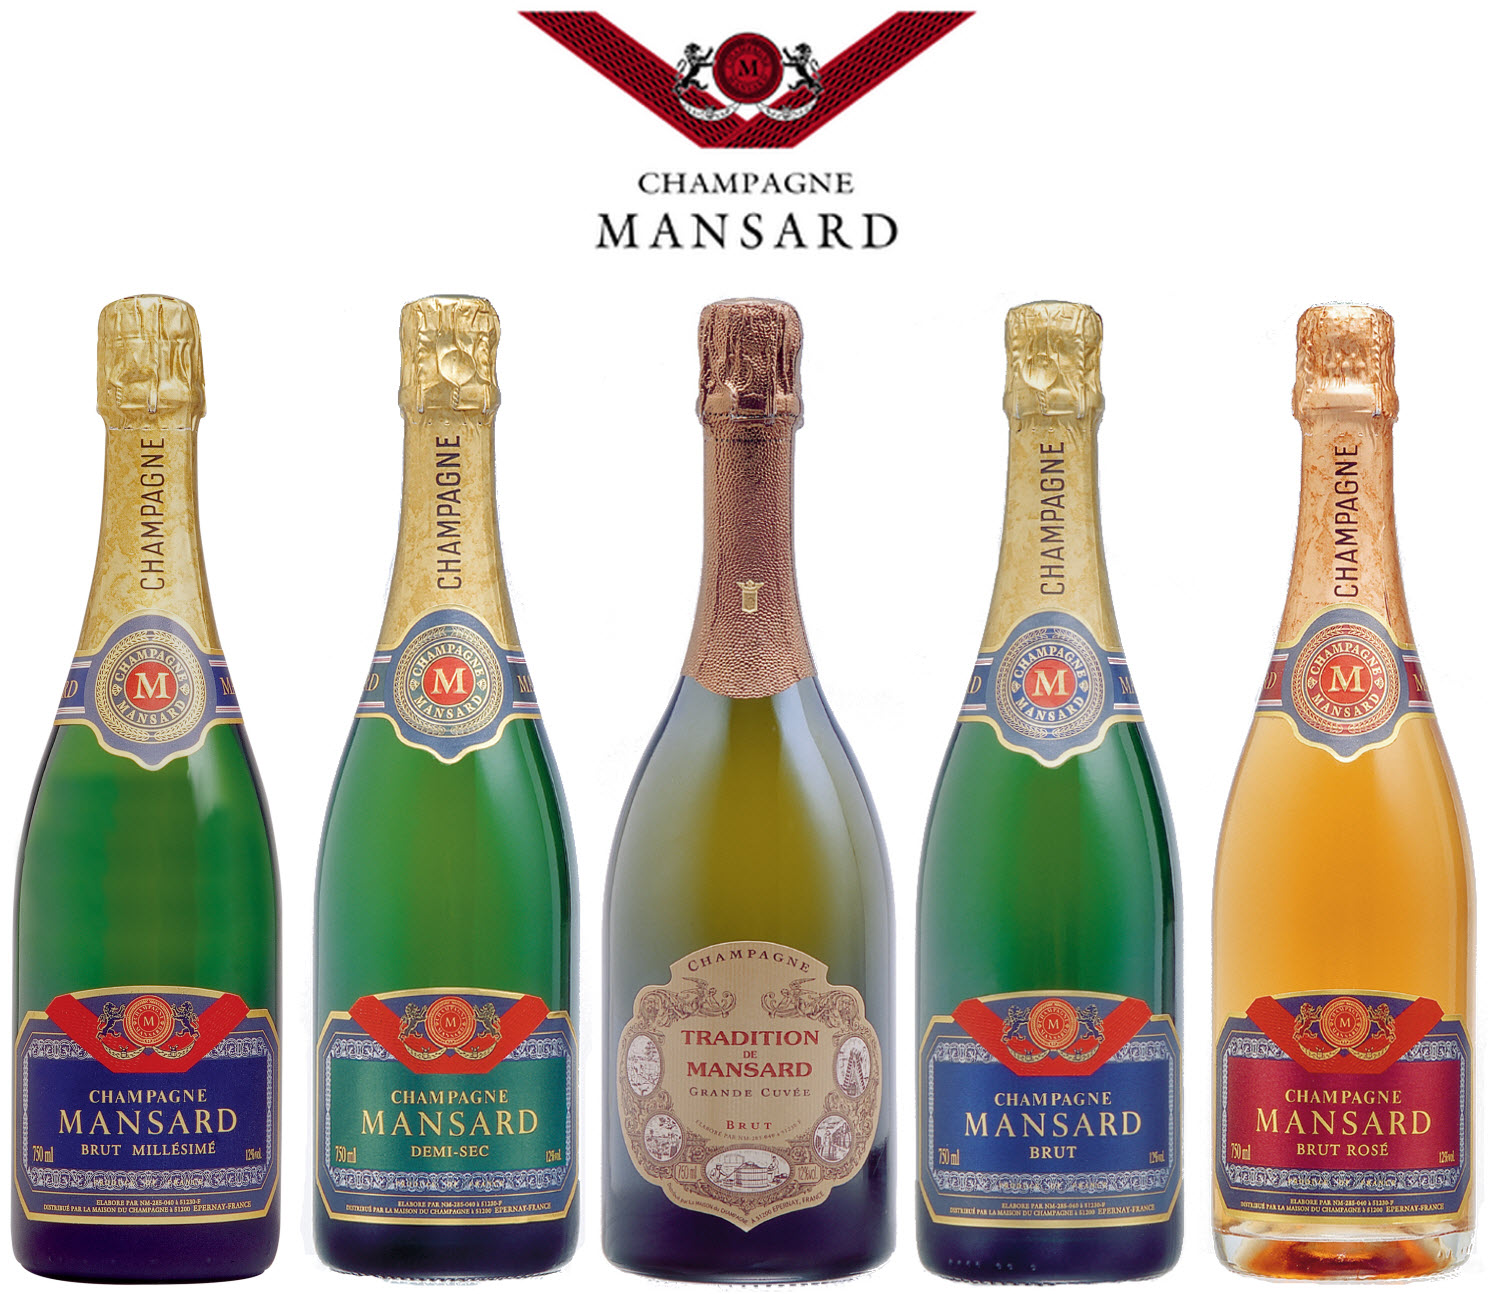 Champagne Mansard